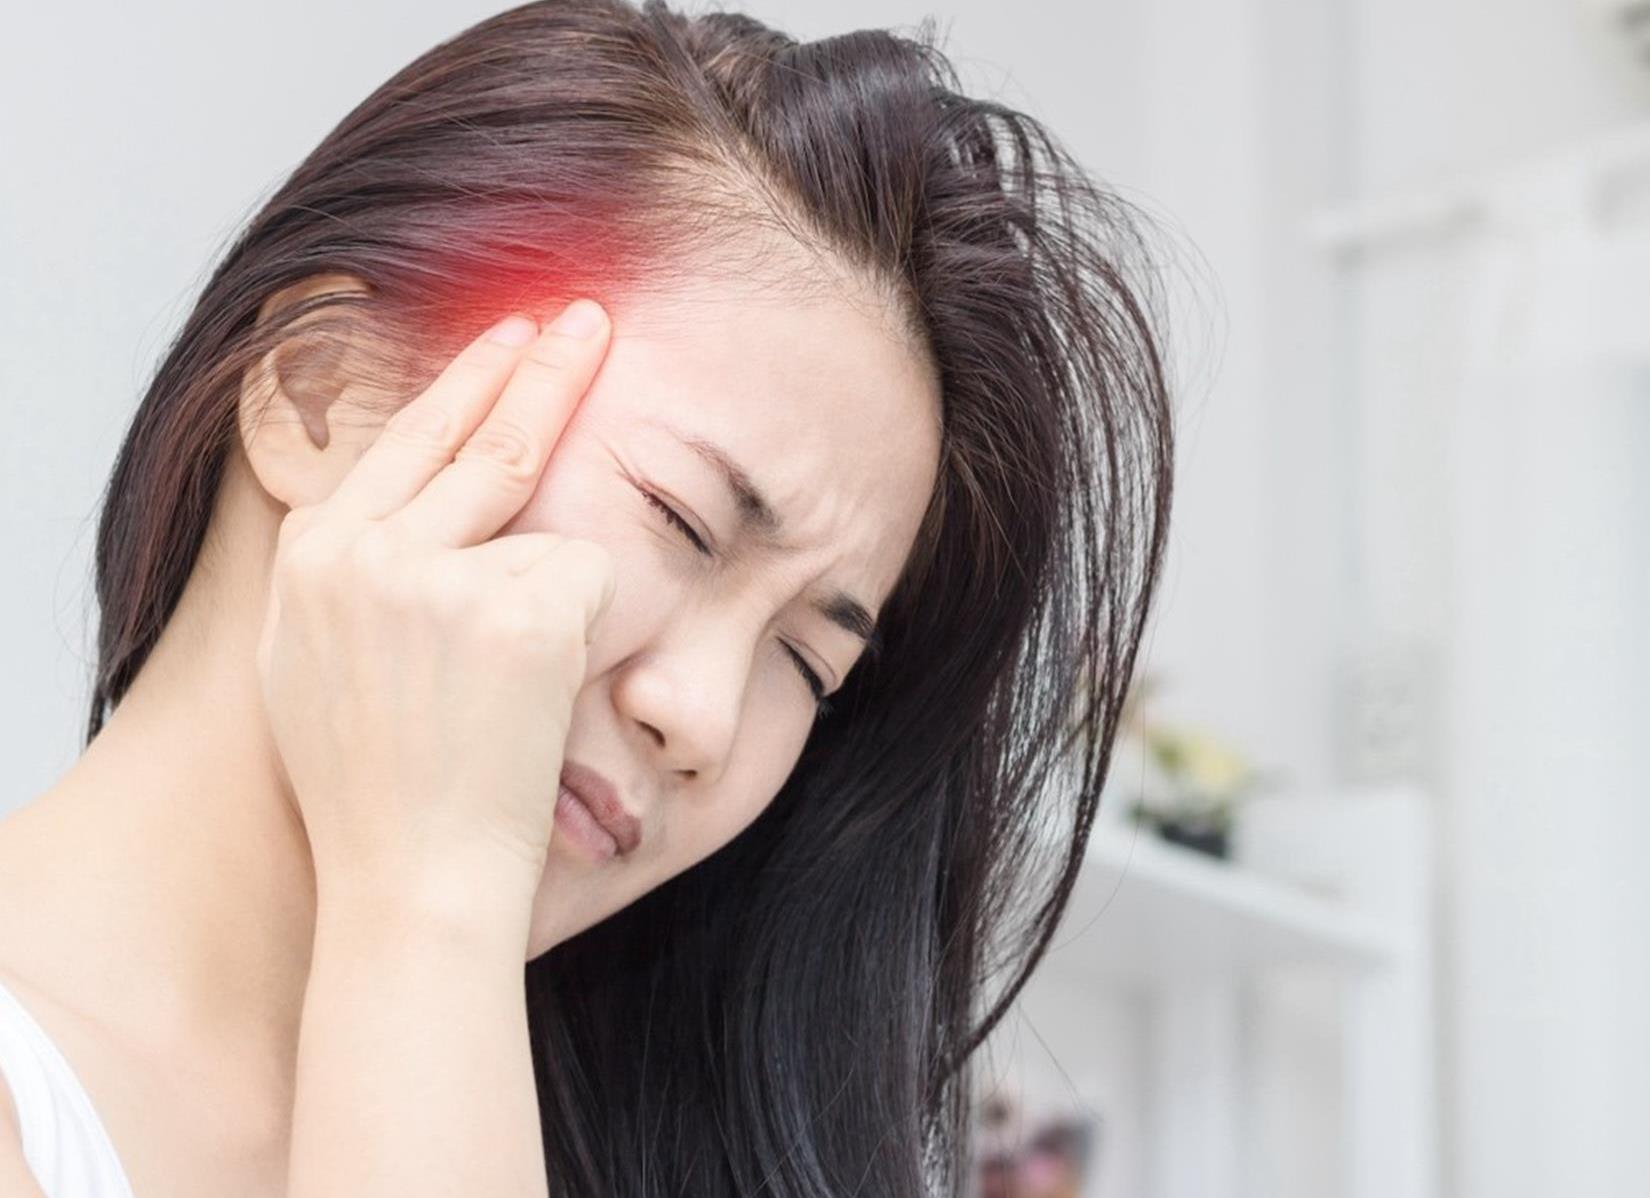 Bahaya Sering Sakit Kepala, Kapan Harus ke Dokter?